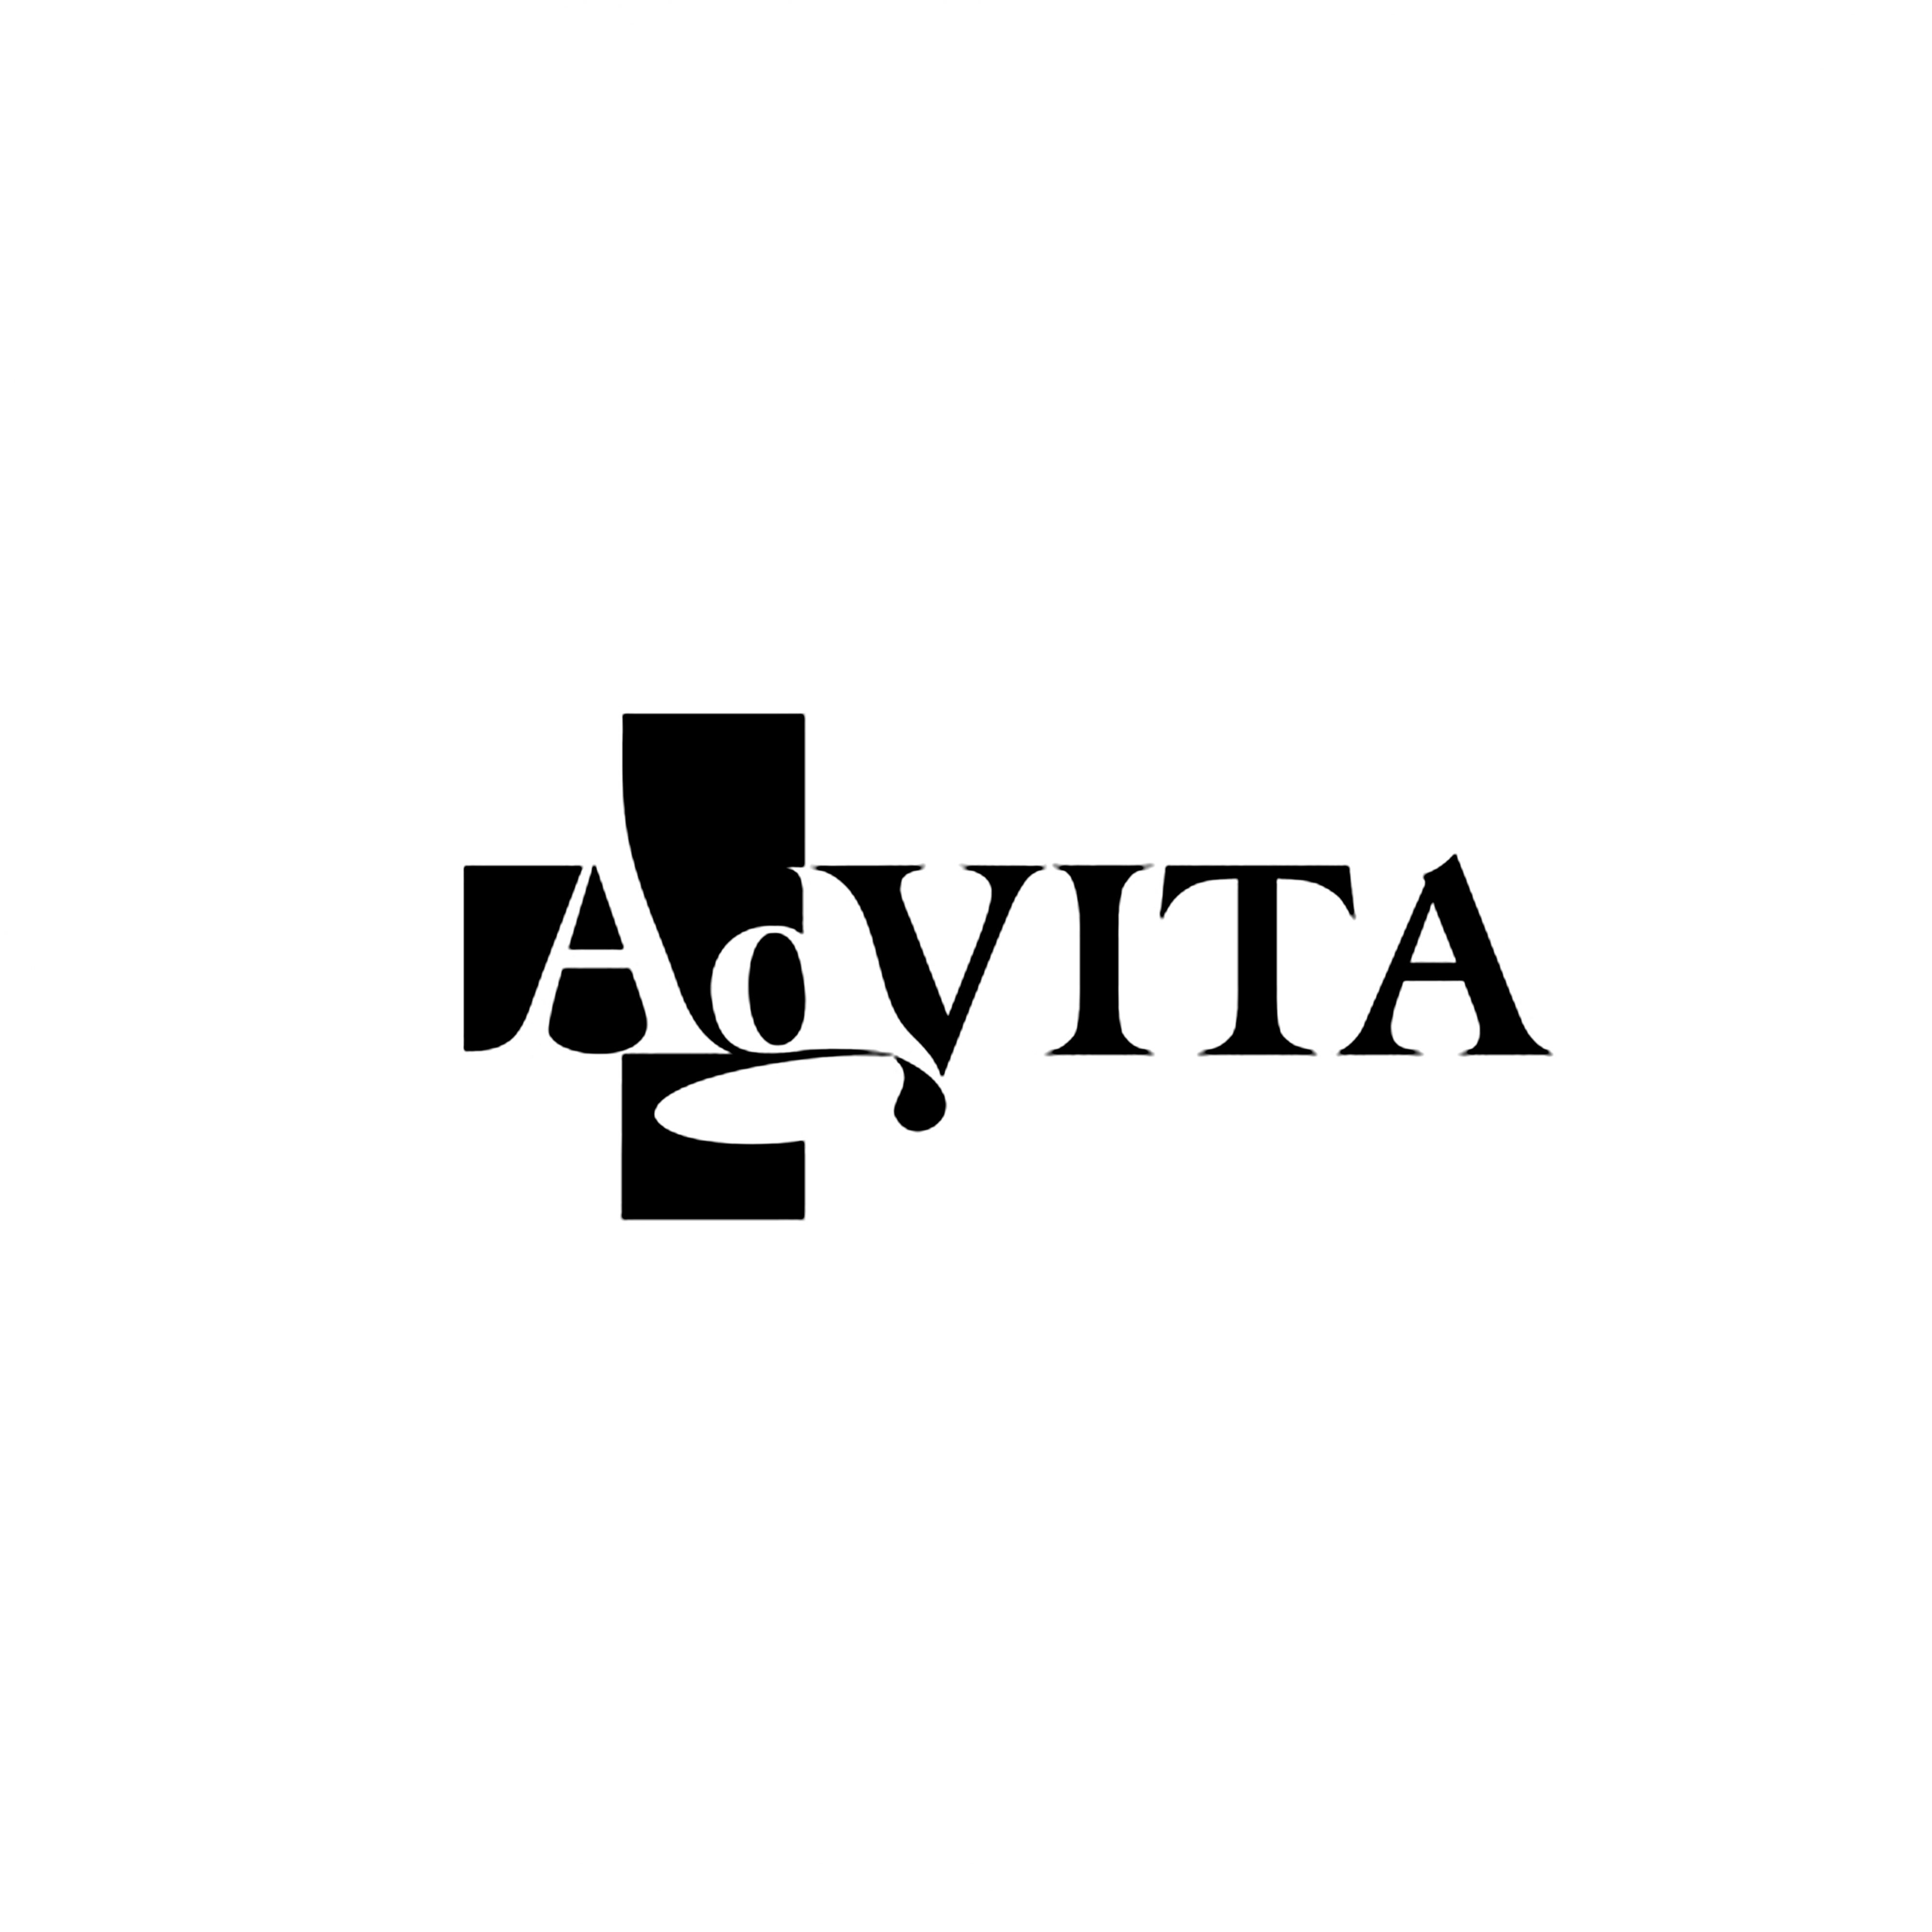 Сайт фонда адвита. АДВИТА. АДВИТА лого. ADVITA благотворительный фонд. Благотворительный фонд ADVITA («ради жизни»).